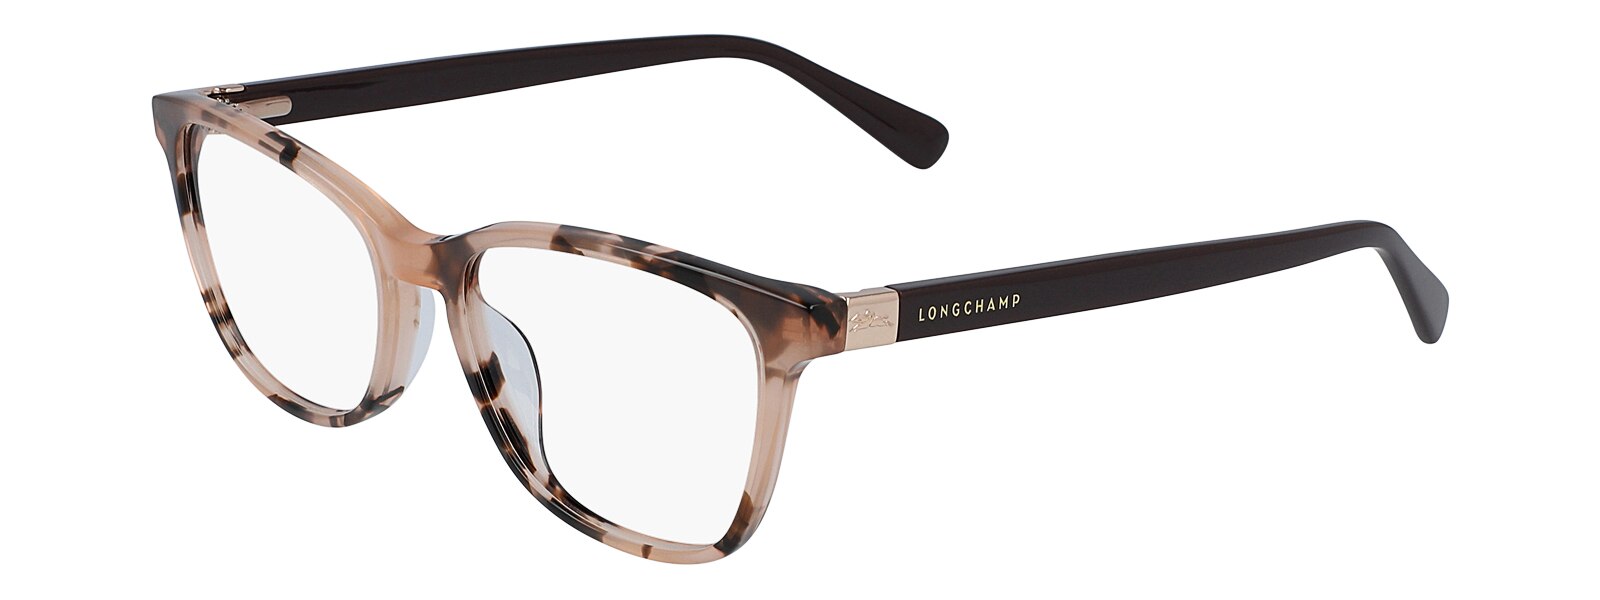 Guggenheim Museum Arne Affectionate Longchamp Glasses | Visionworks